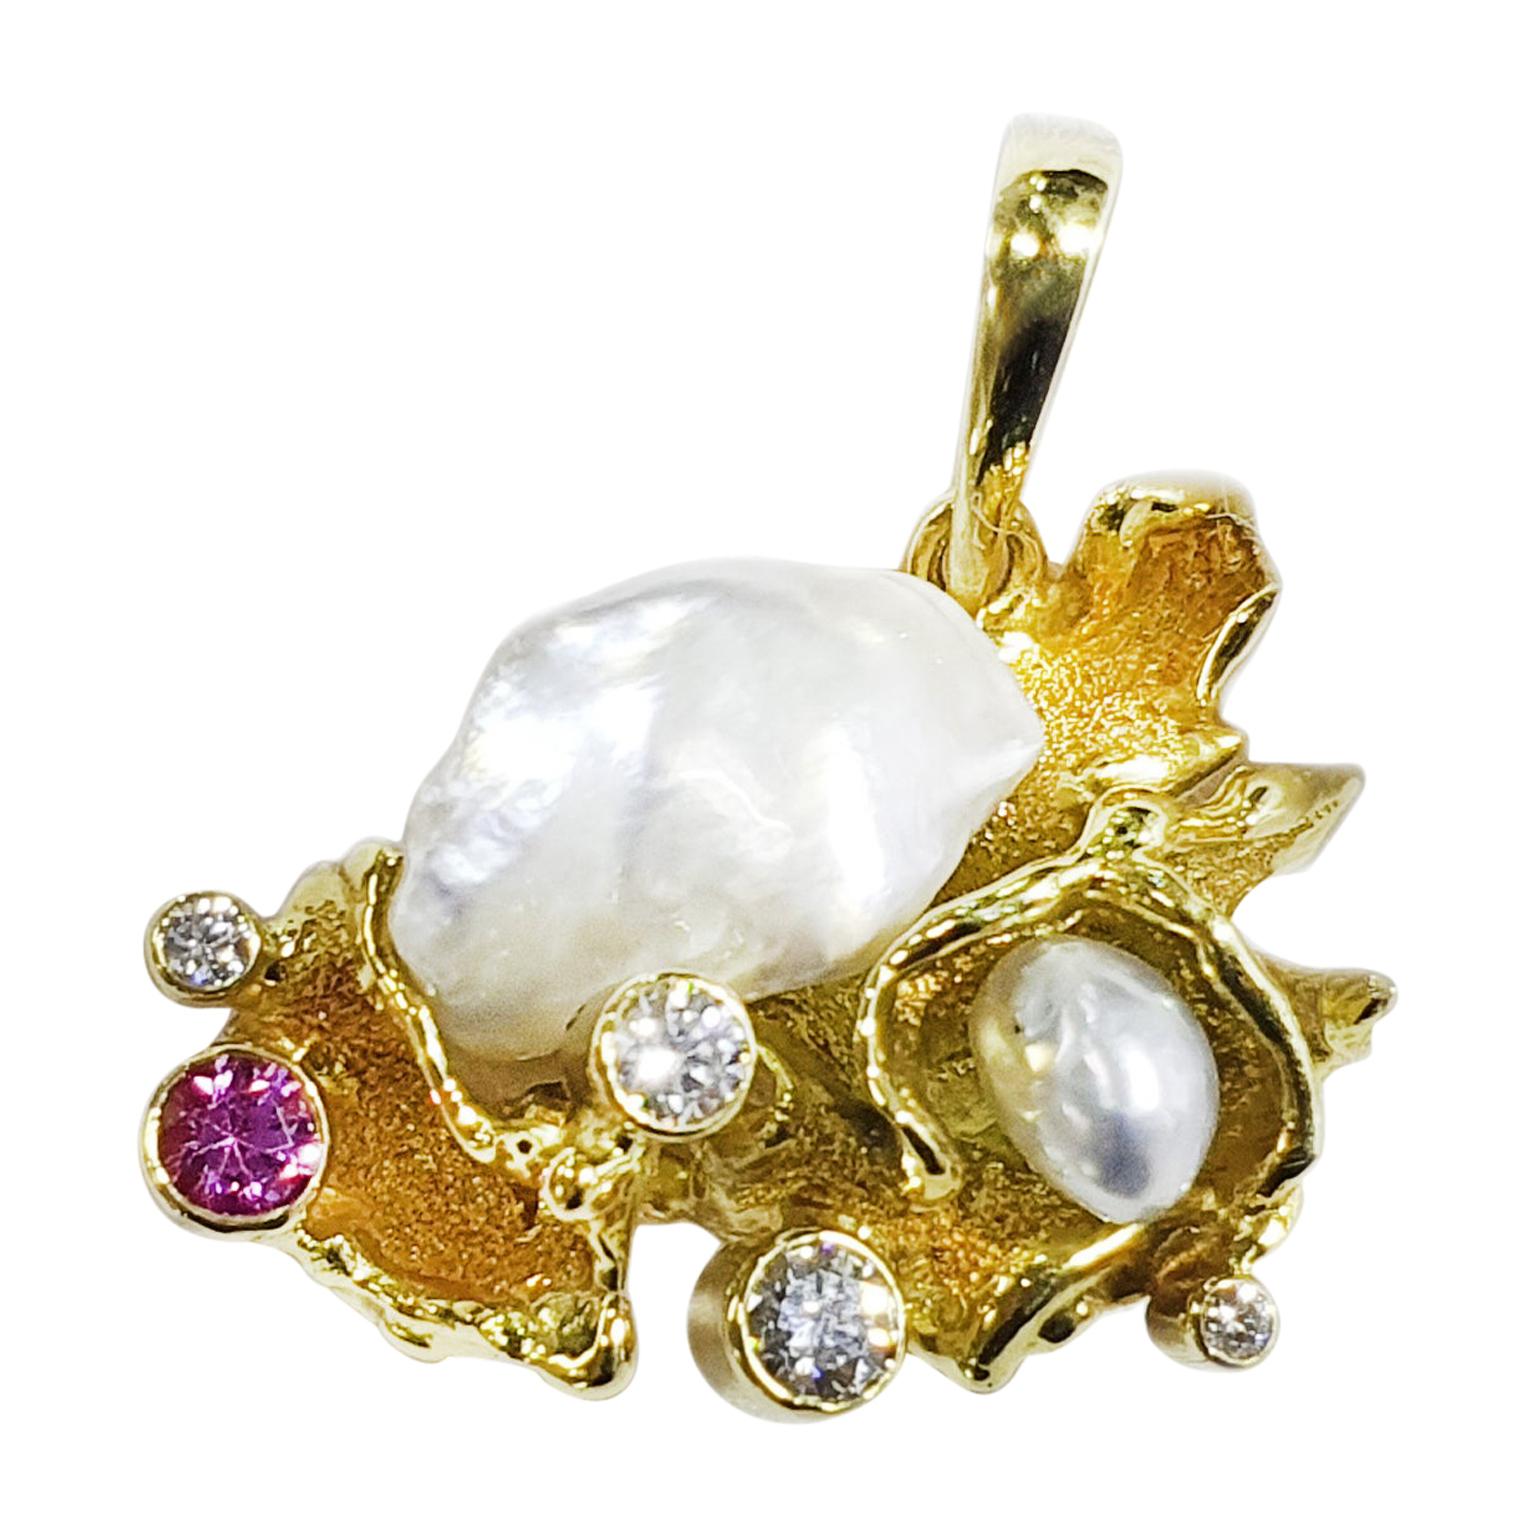 Paul Paul Amey 18k Gold, Diamant, Broome Keshi Perle und rosa Saphir Anhänger